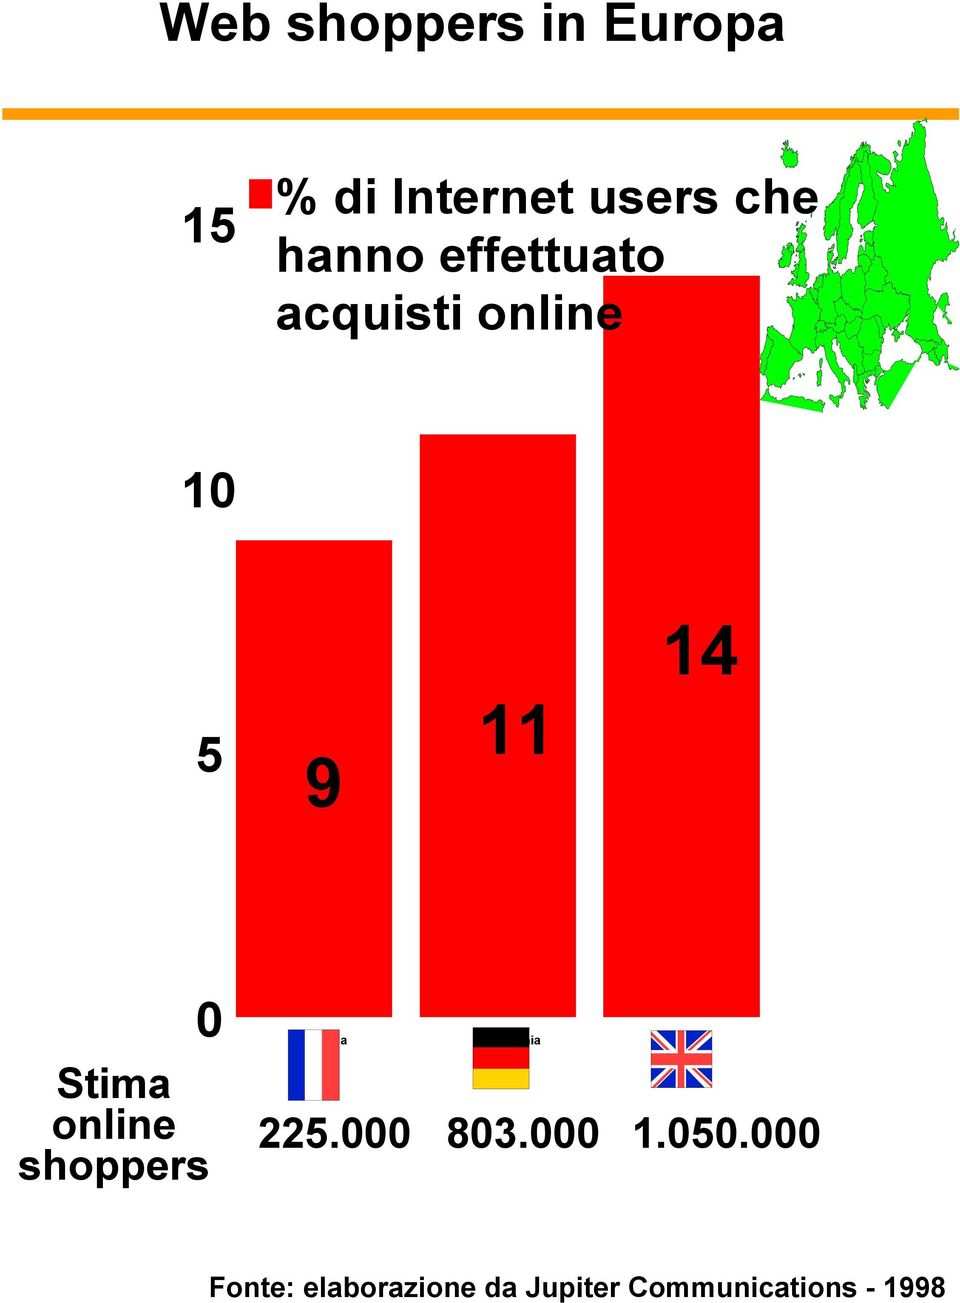 online shoppers Francia Germania Uk 225.000 803.000 1.